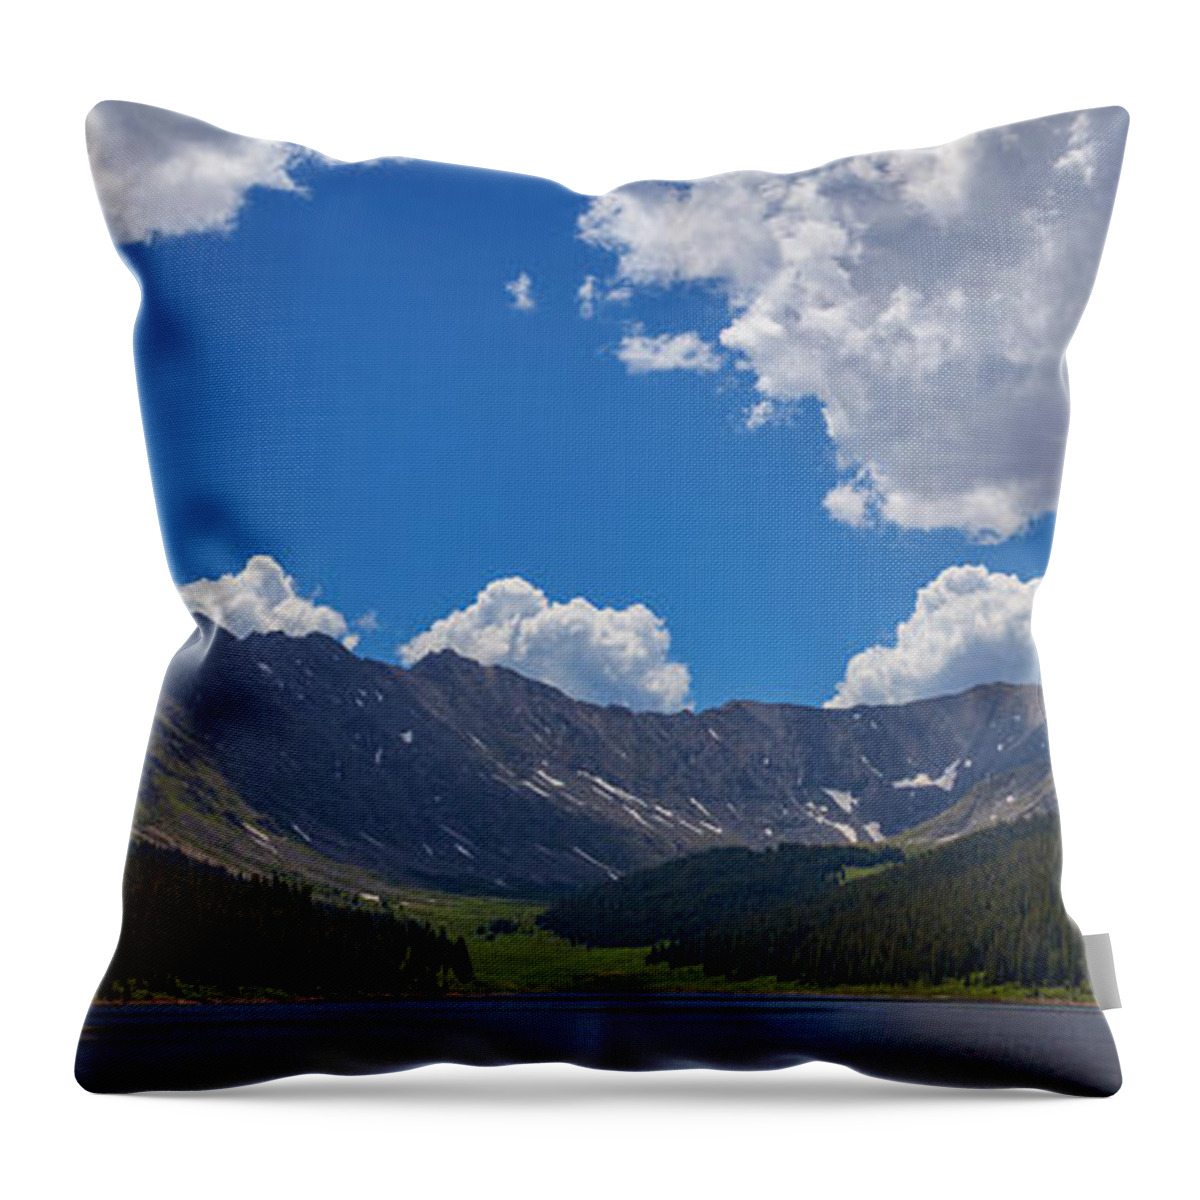 Colorado Throw Pillow featuring the photograph Clinton Gulch Summer by Darren White